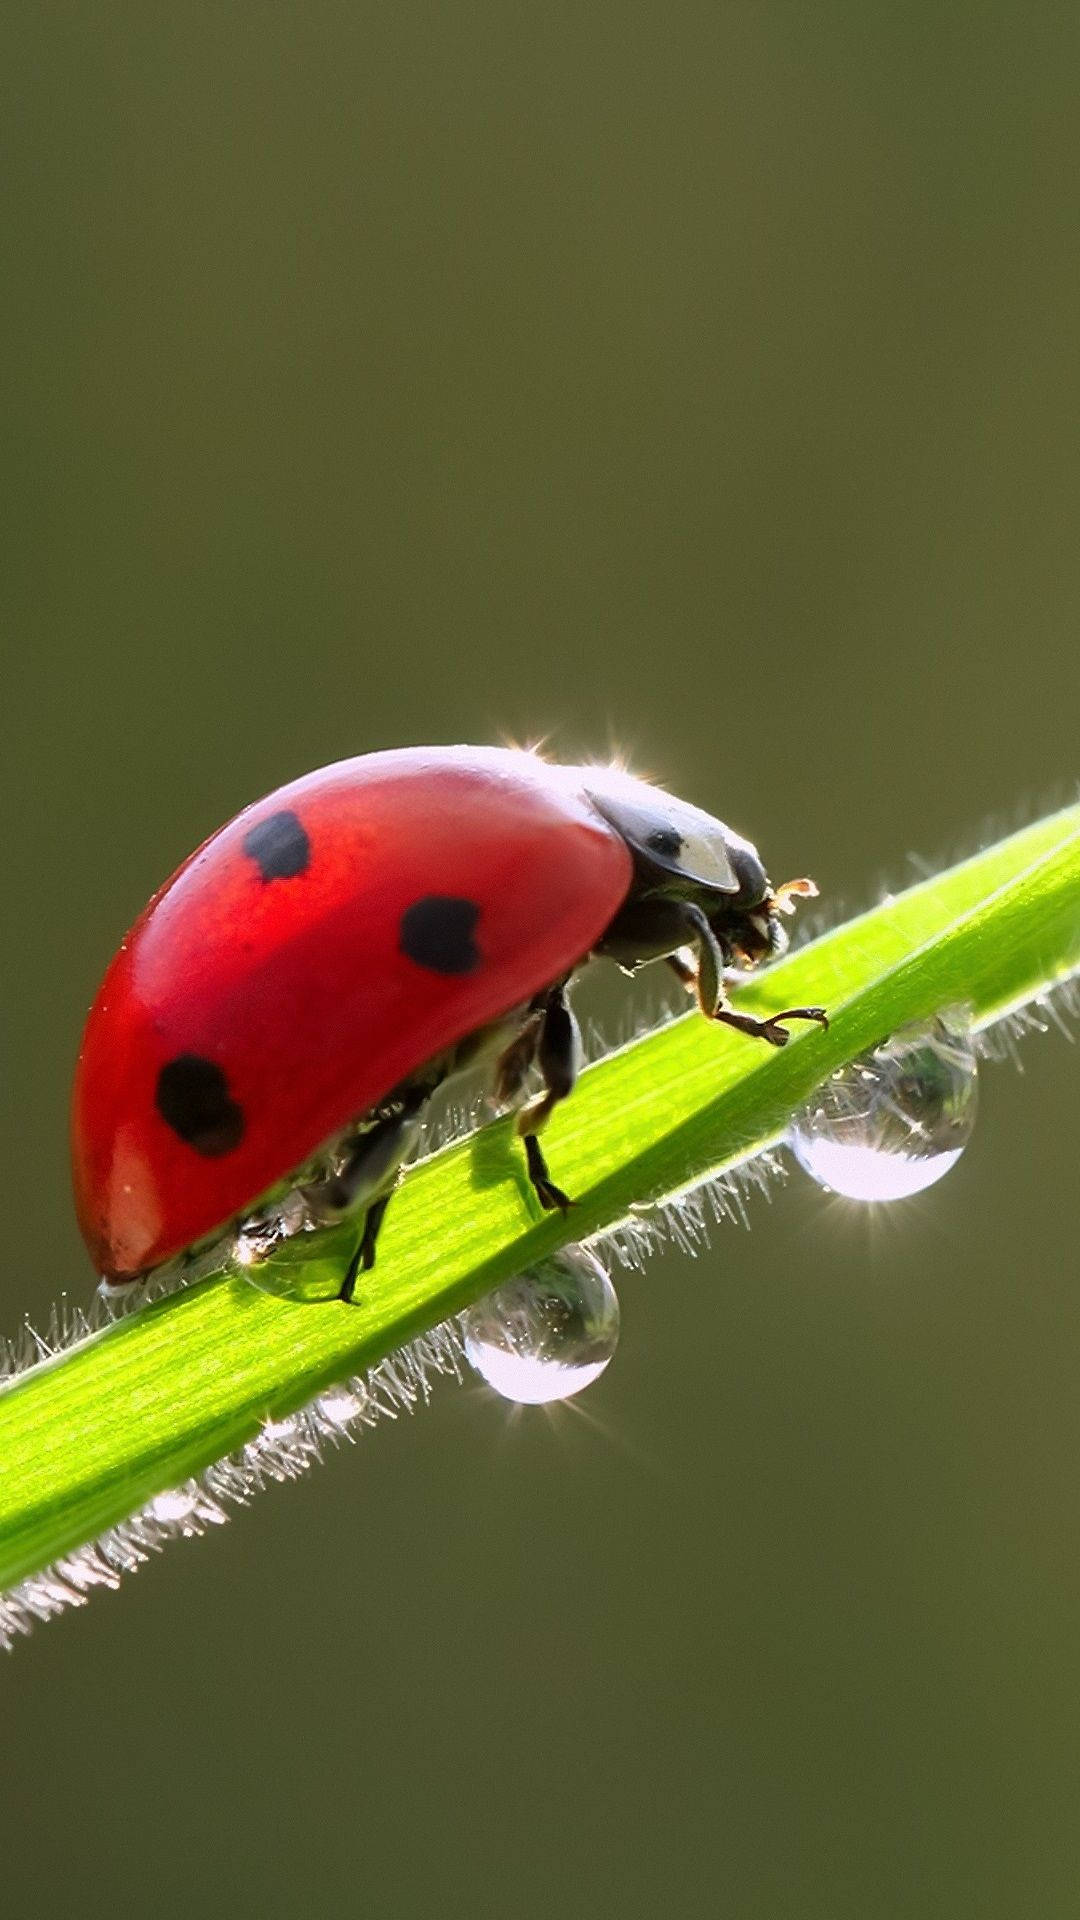 Ladybug Beetle On A Green Stem